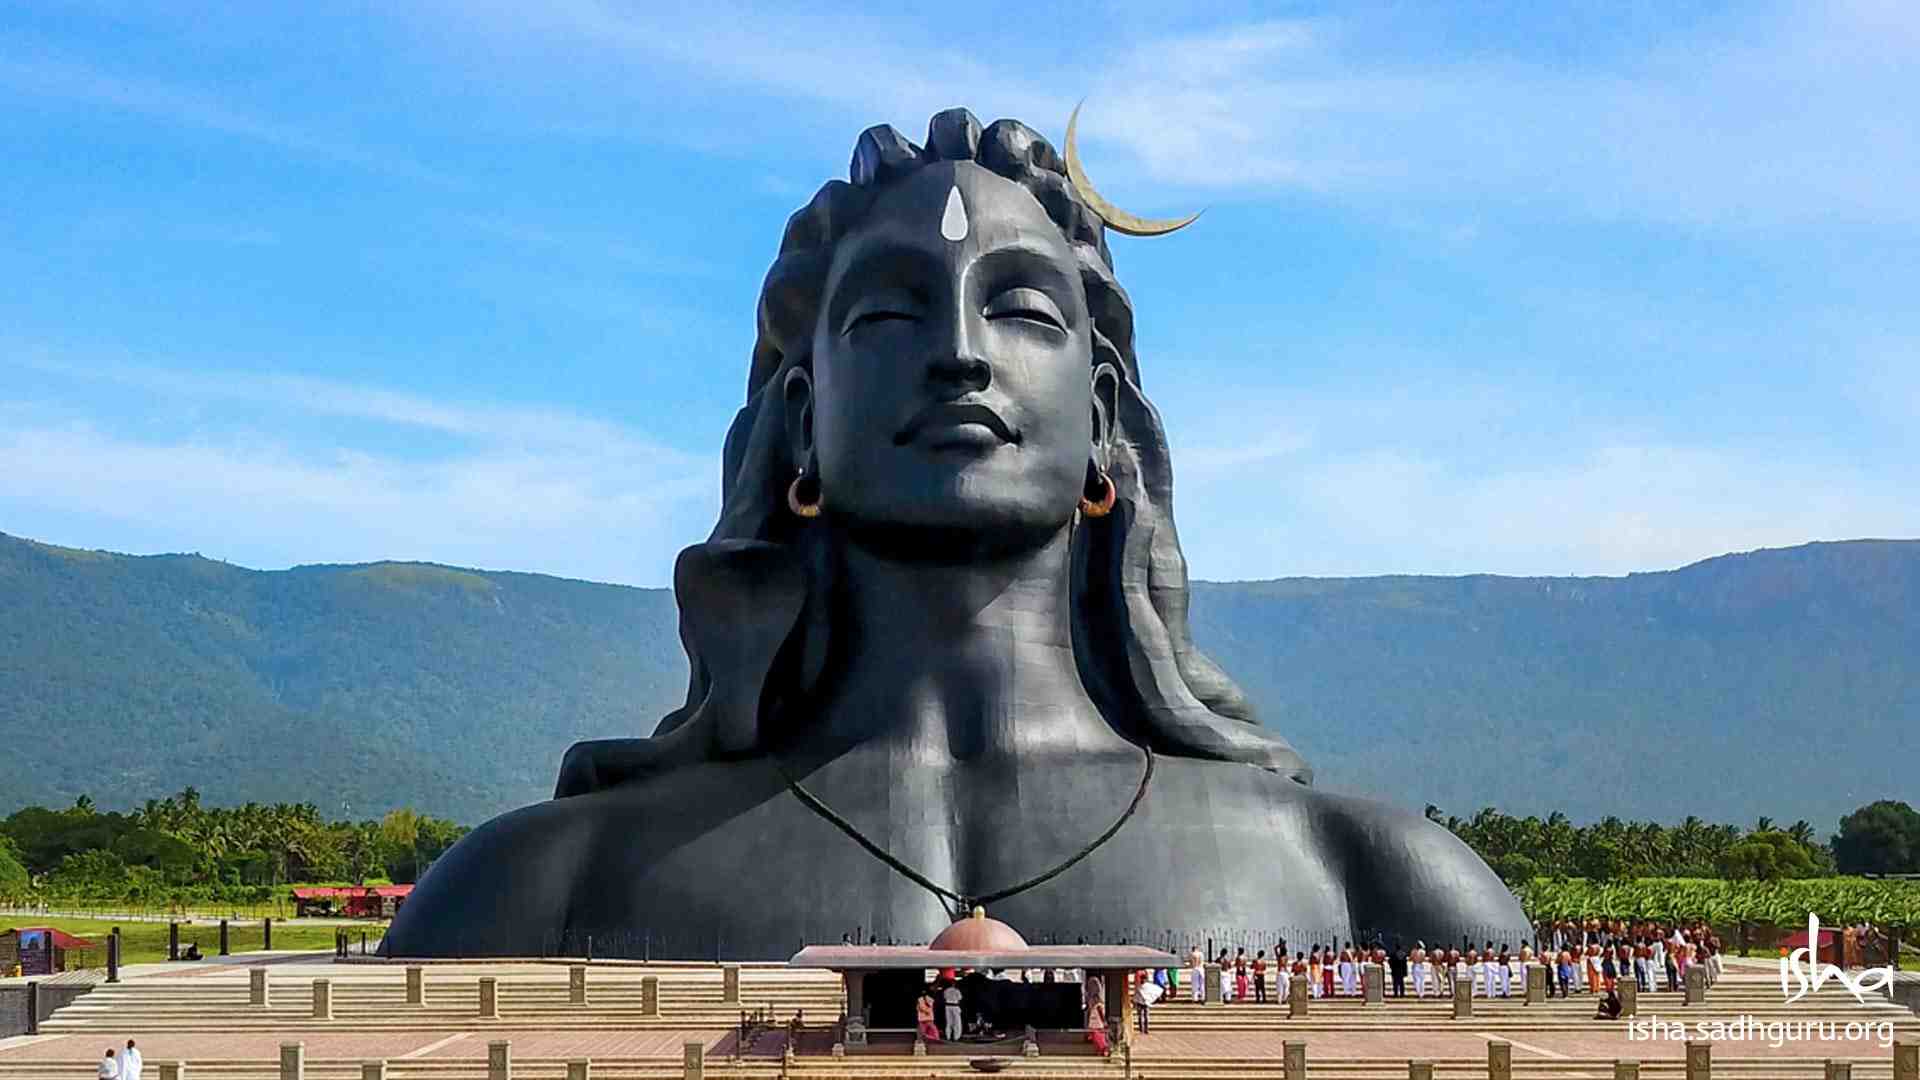 Shiva(Adiyogi) Wallpaper HD Download for Mobile